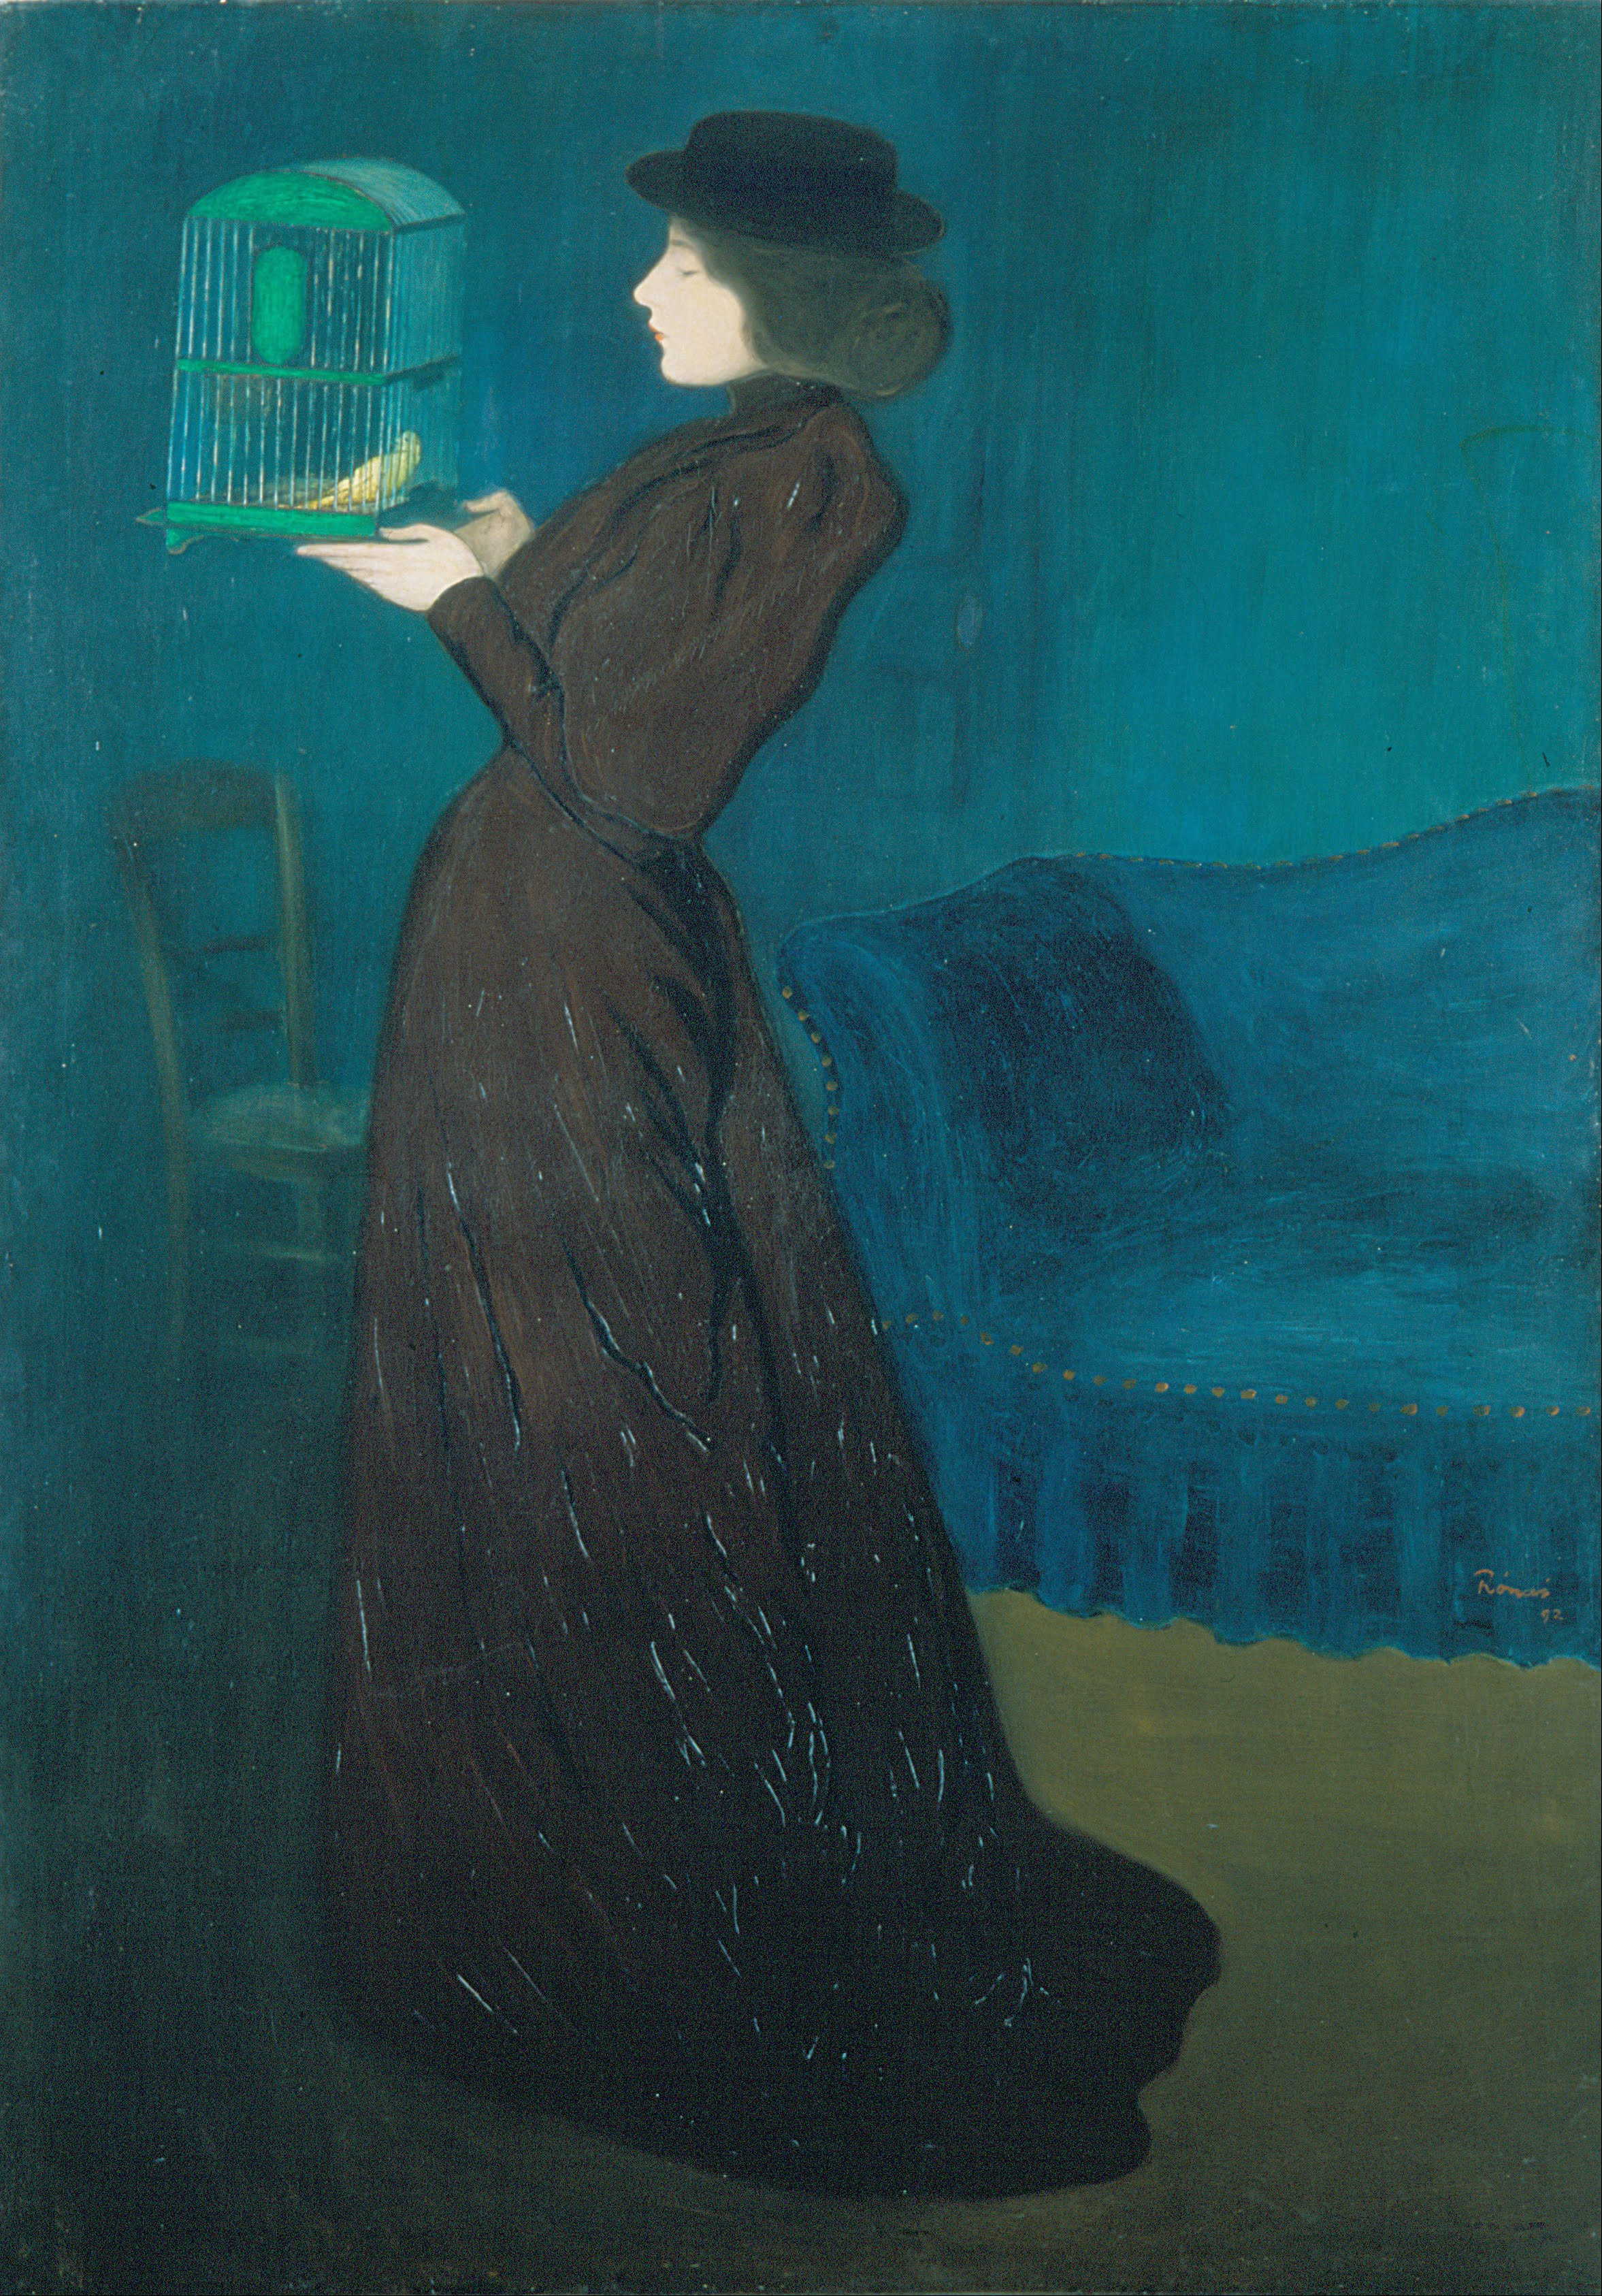 Woman with a Birdcage by József Rippl-Rónai - 1892 - 185.5 x 130 cm Magyar Nemzeti Galéria, Budapest